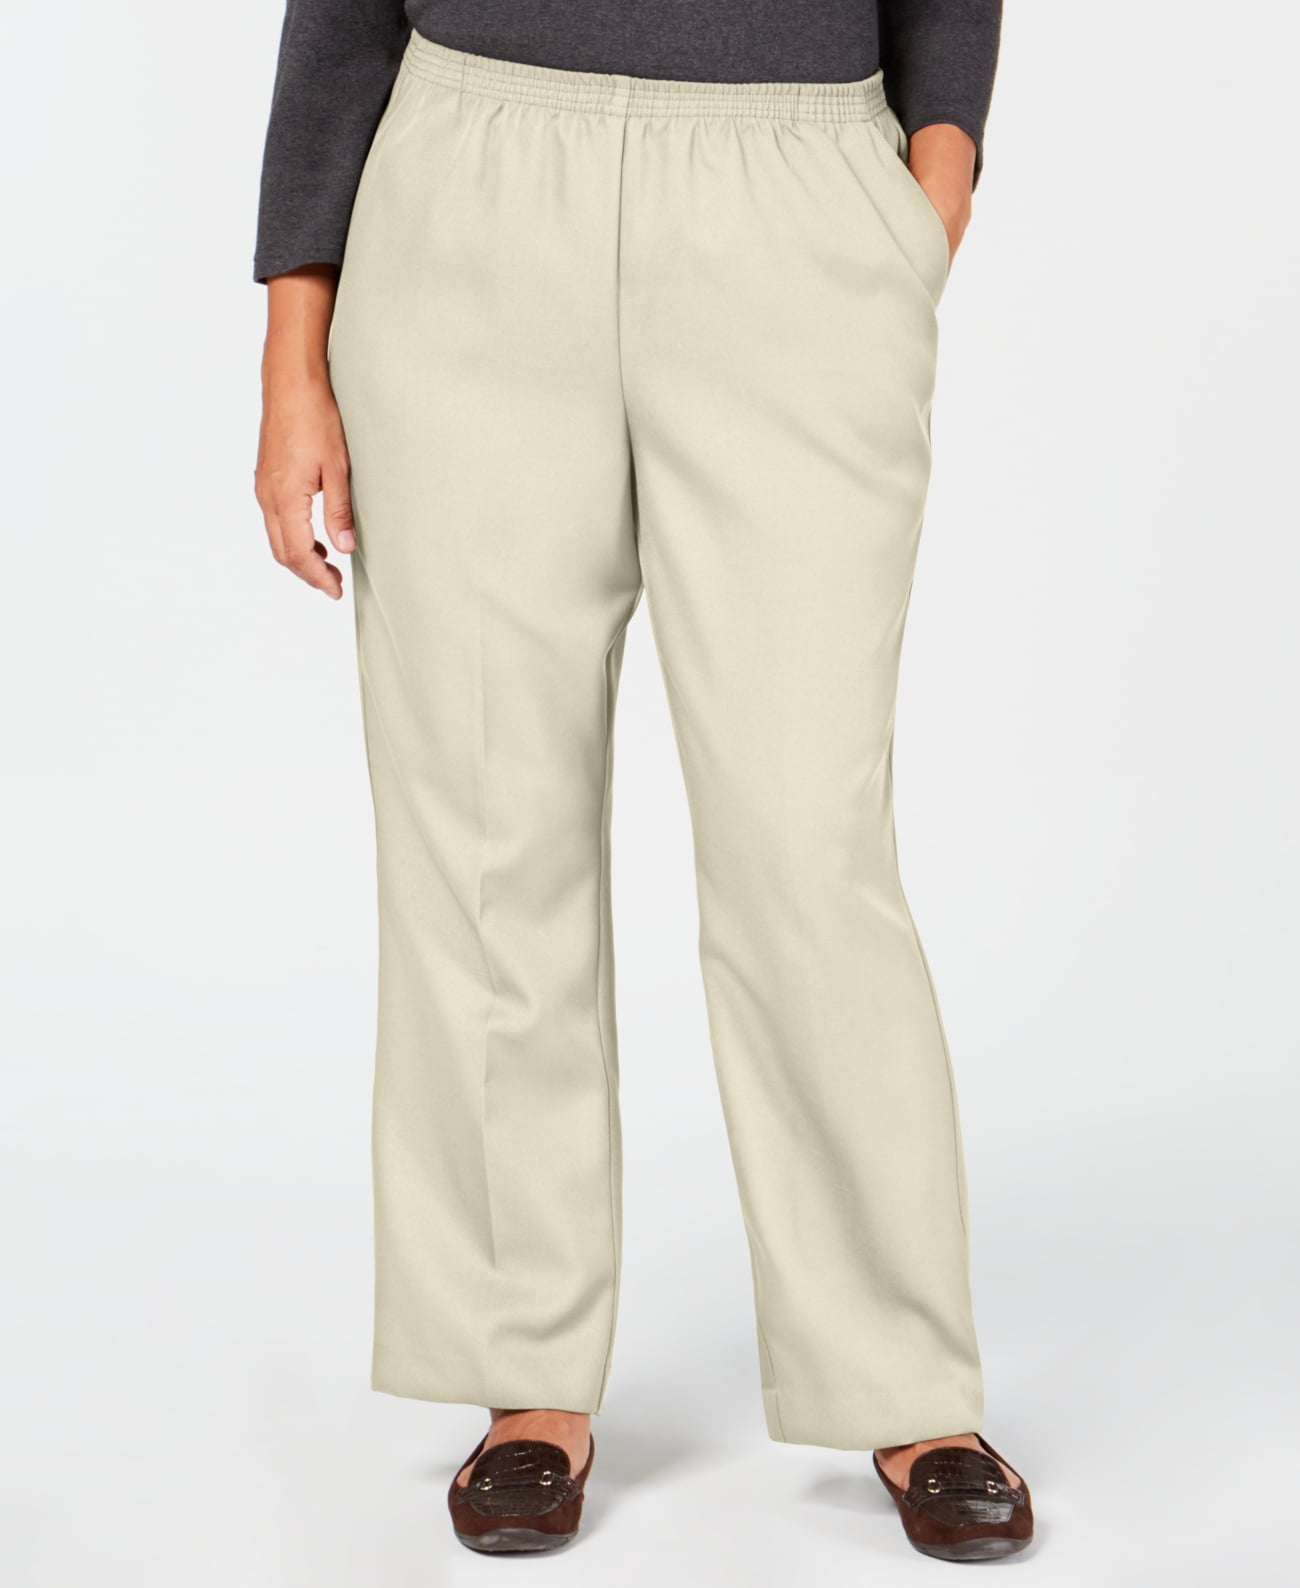 Karen Scott Plus-Size Mid-Rise Pull-On Pants, Beige, 2X - Walmart.com